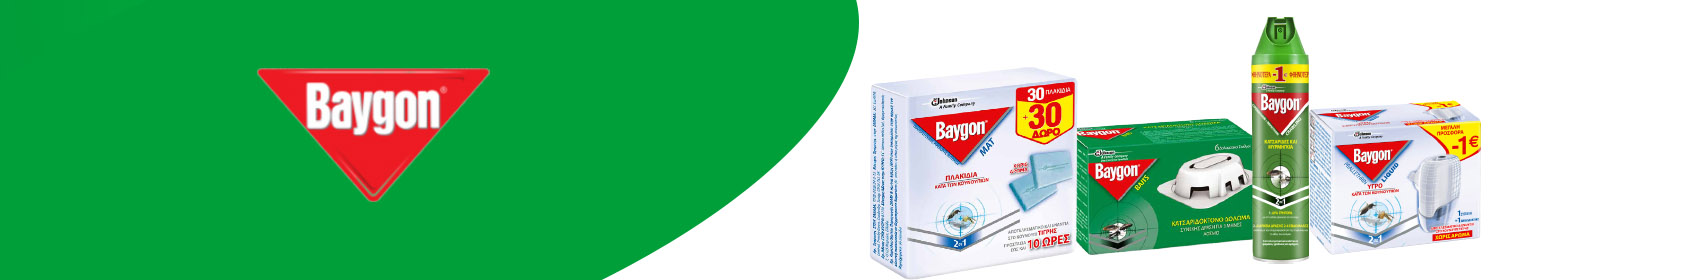 baygon-banner